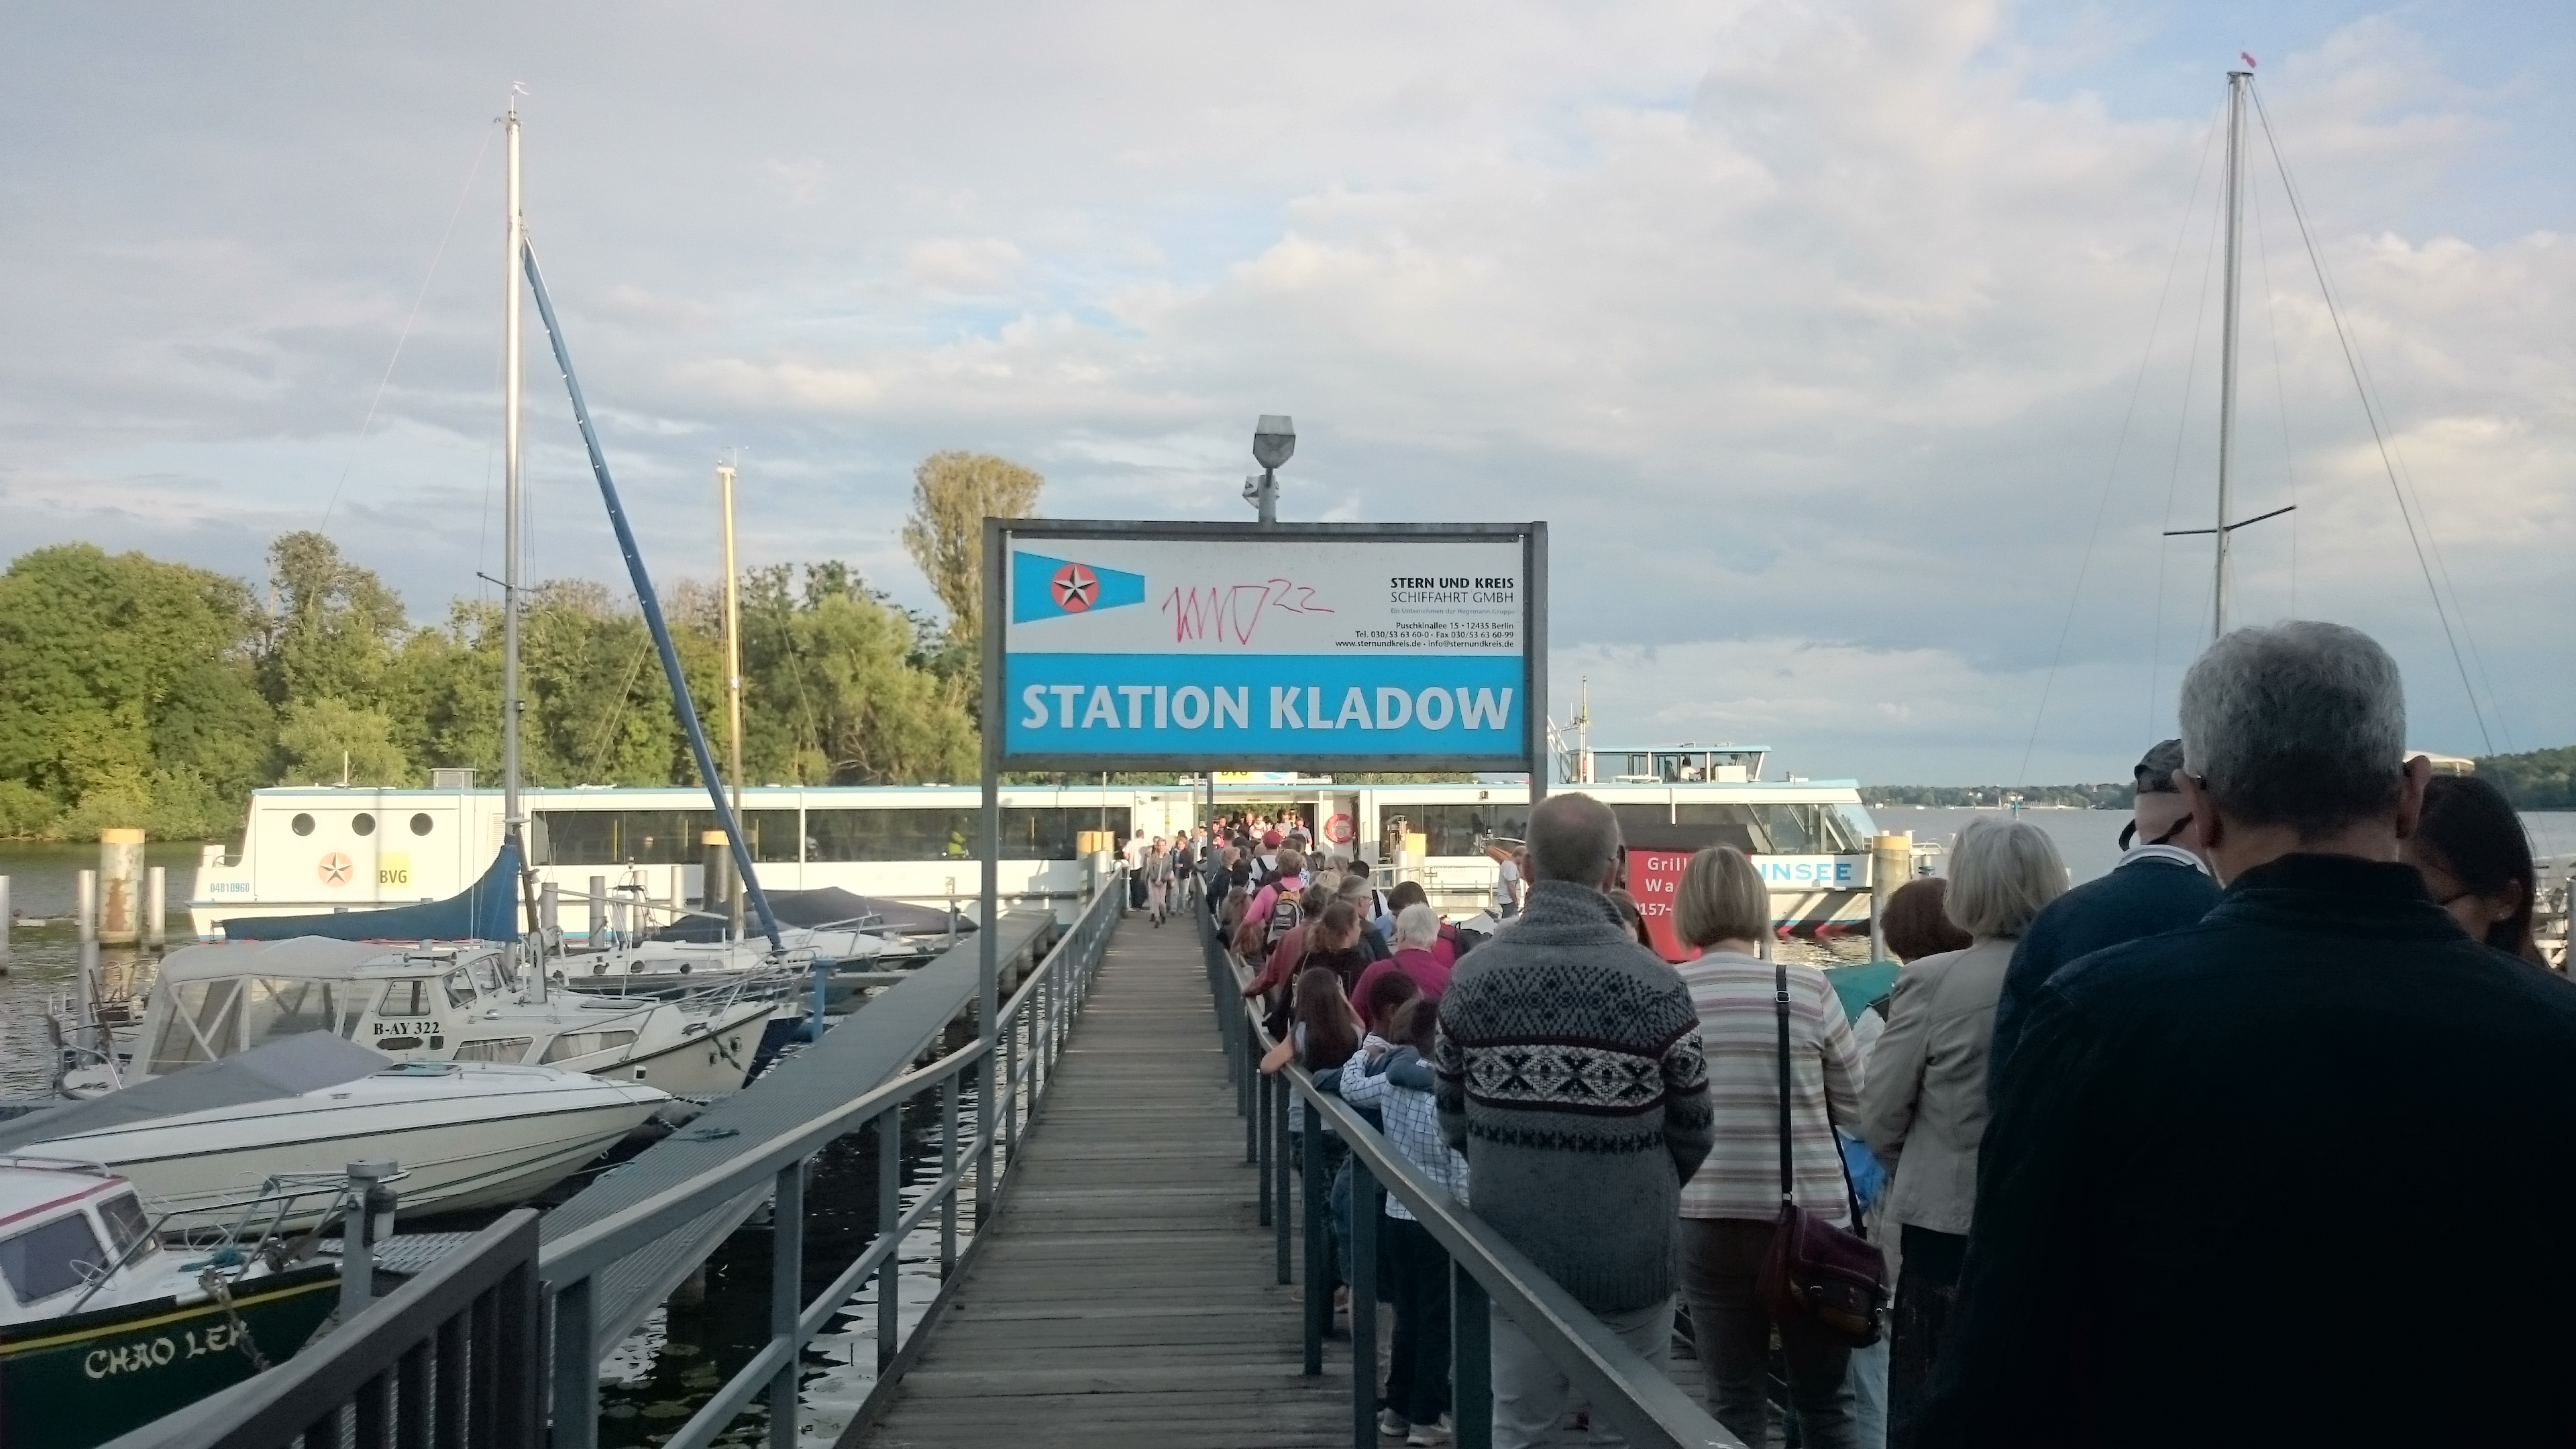 Station Kladow